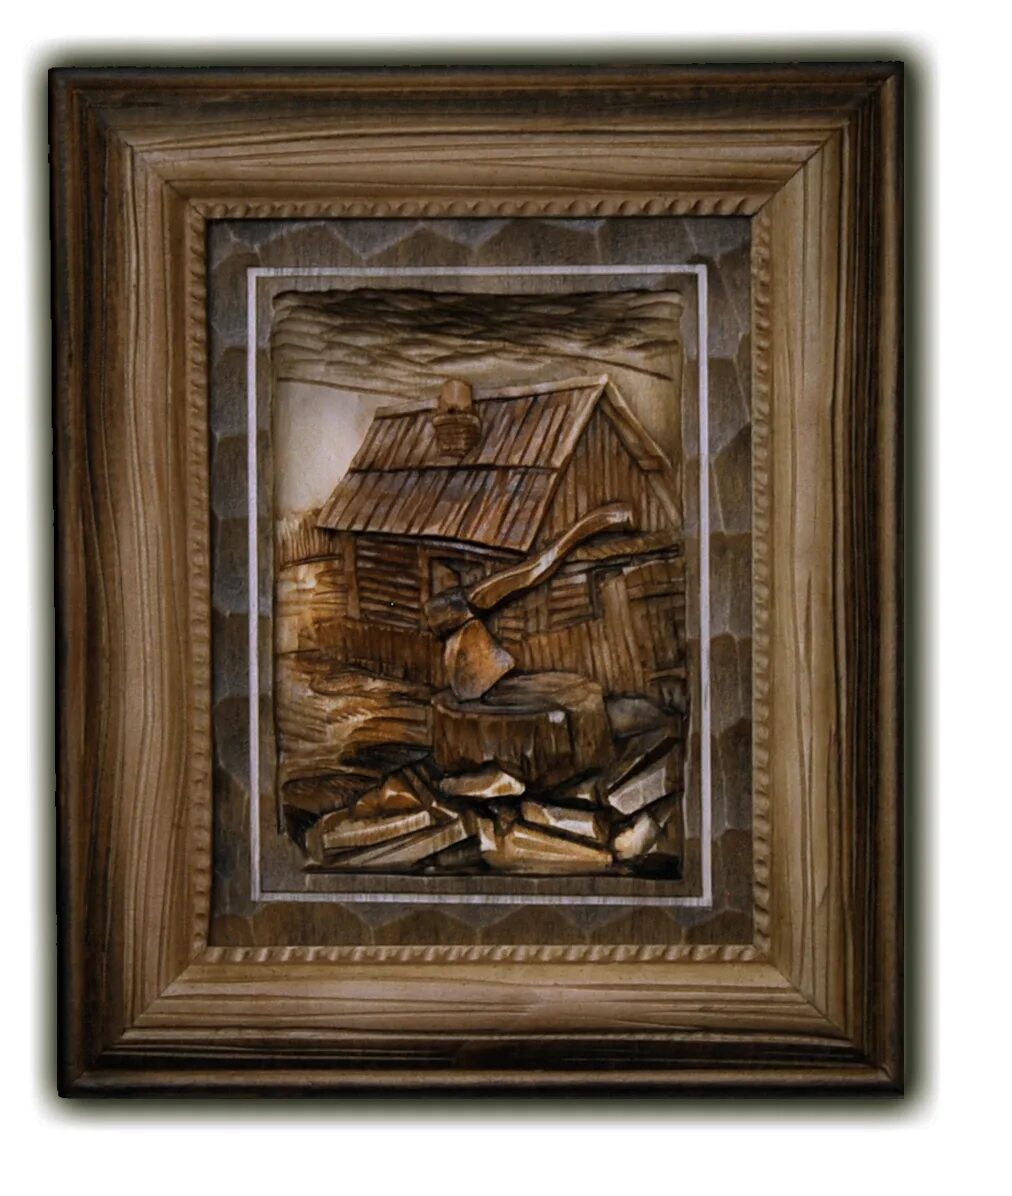 Картины Виктора Дубовика. Резные картины Виктора Дубовика. Картина в деревянной раме.